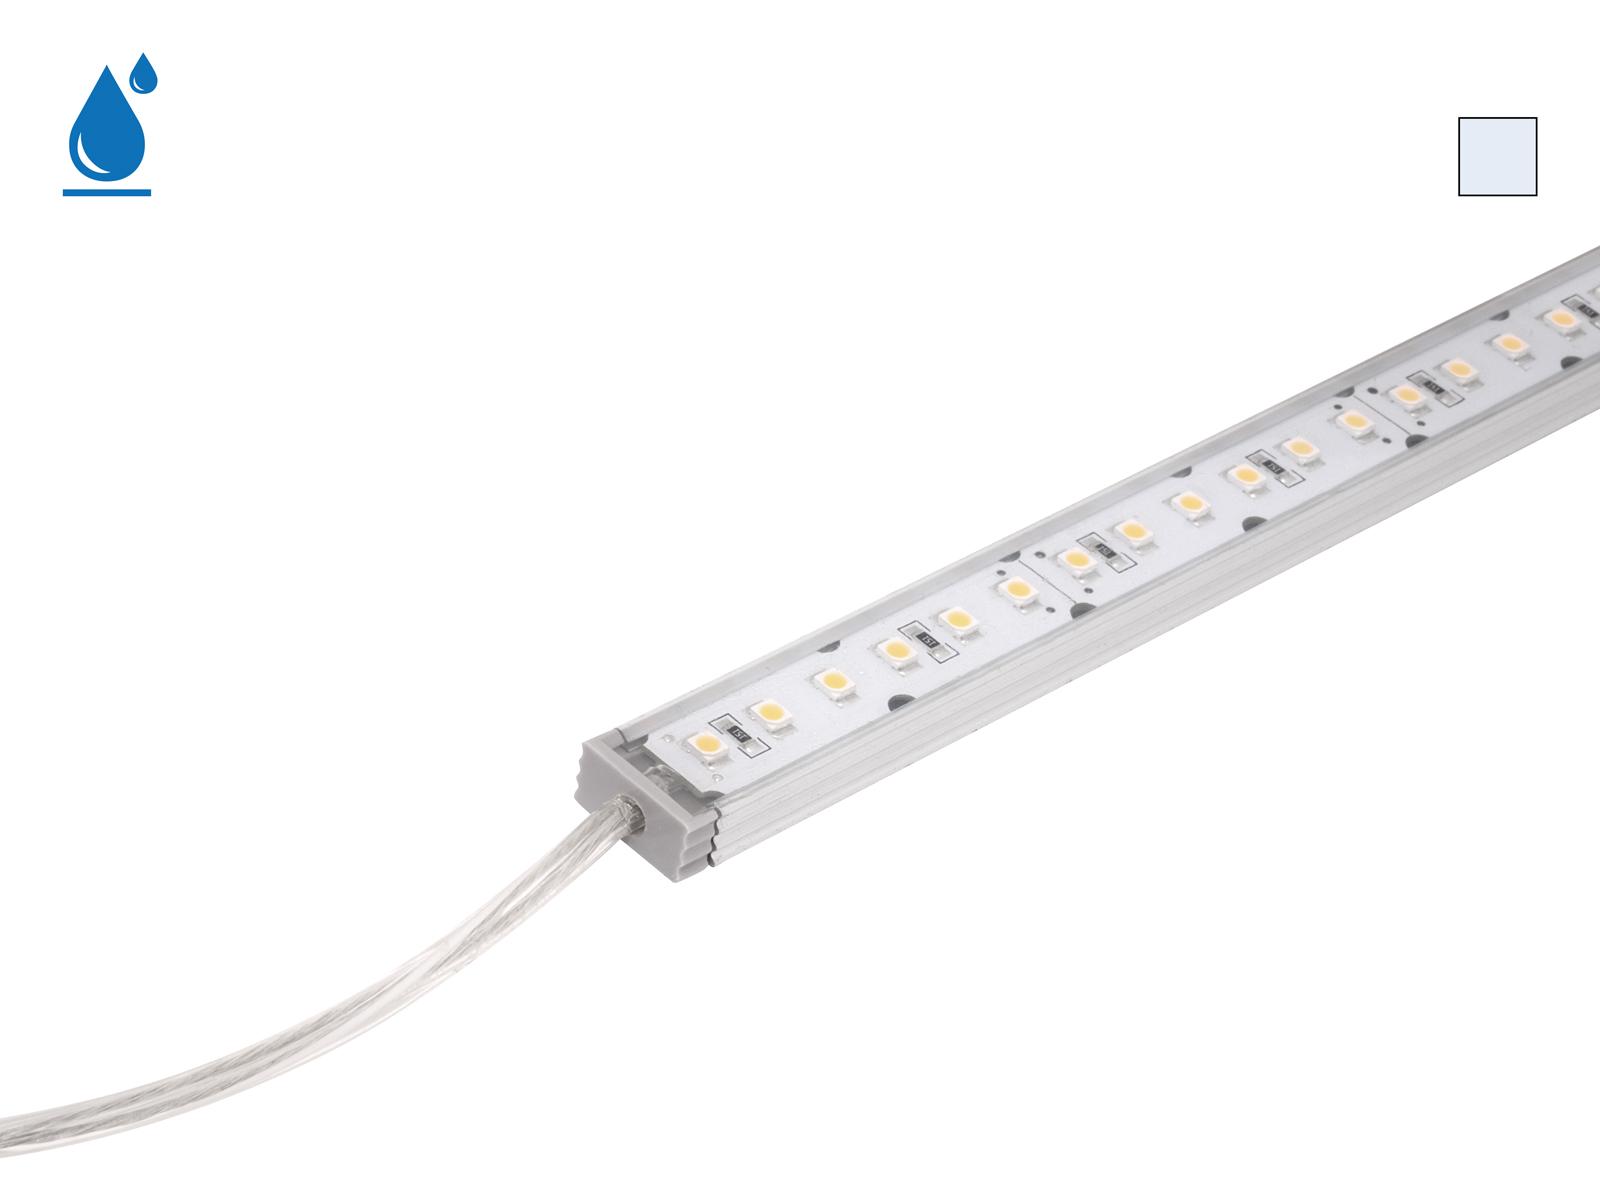 LED-Leisten (starr) in großer Auswahl vom Fachmann | PUR-LED